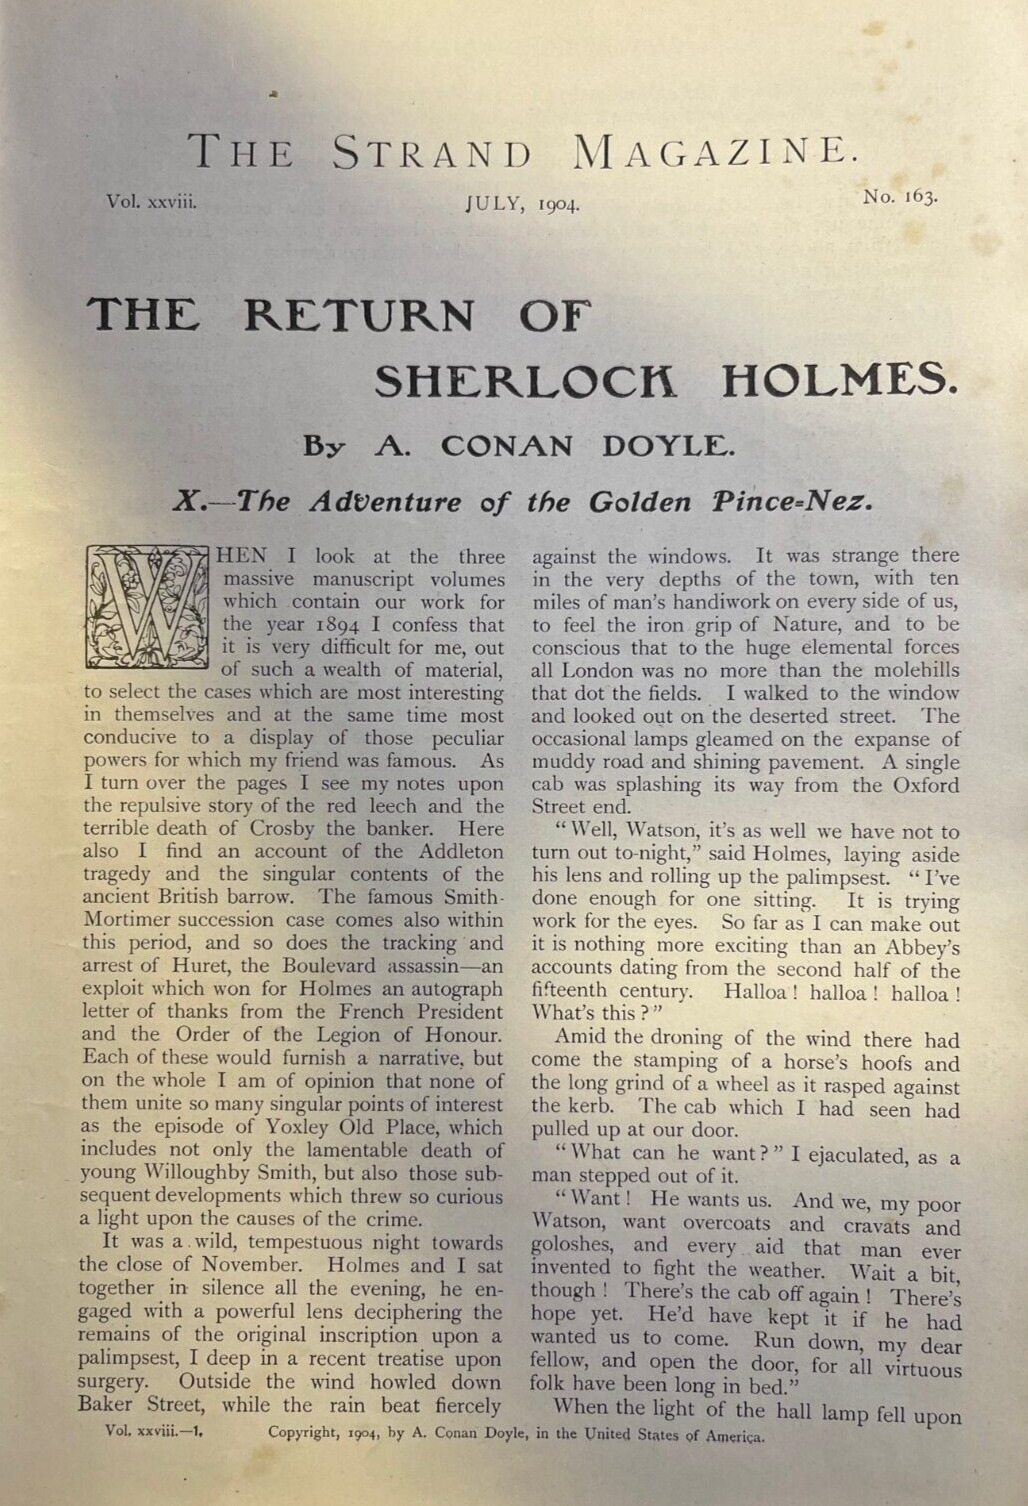 1904 Arthur Conan Doyle Sherlock Holmes Adventure of the Golden Pince-Nez